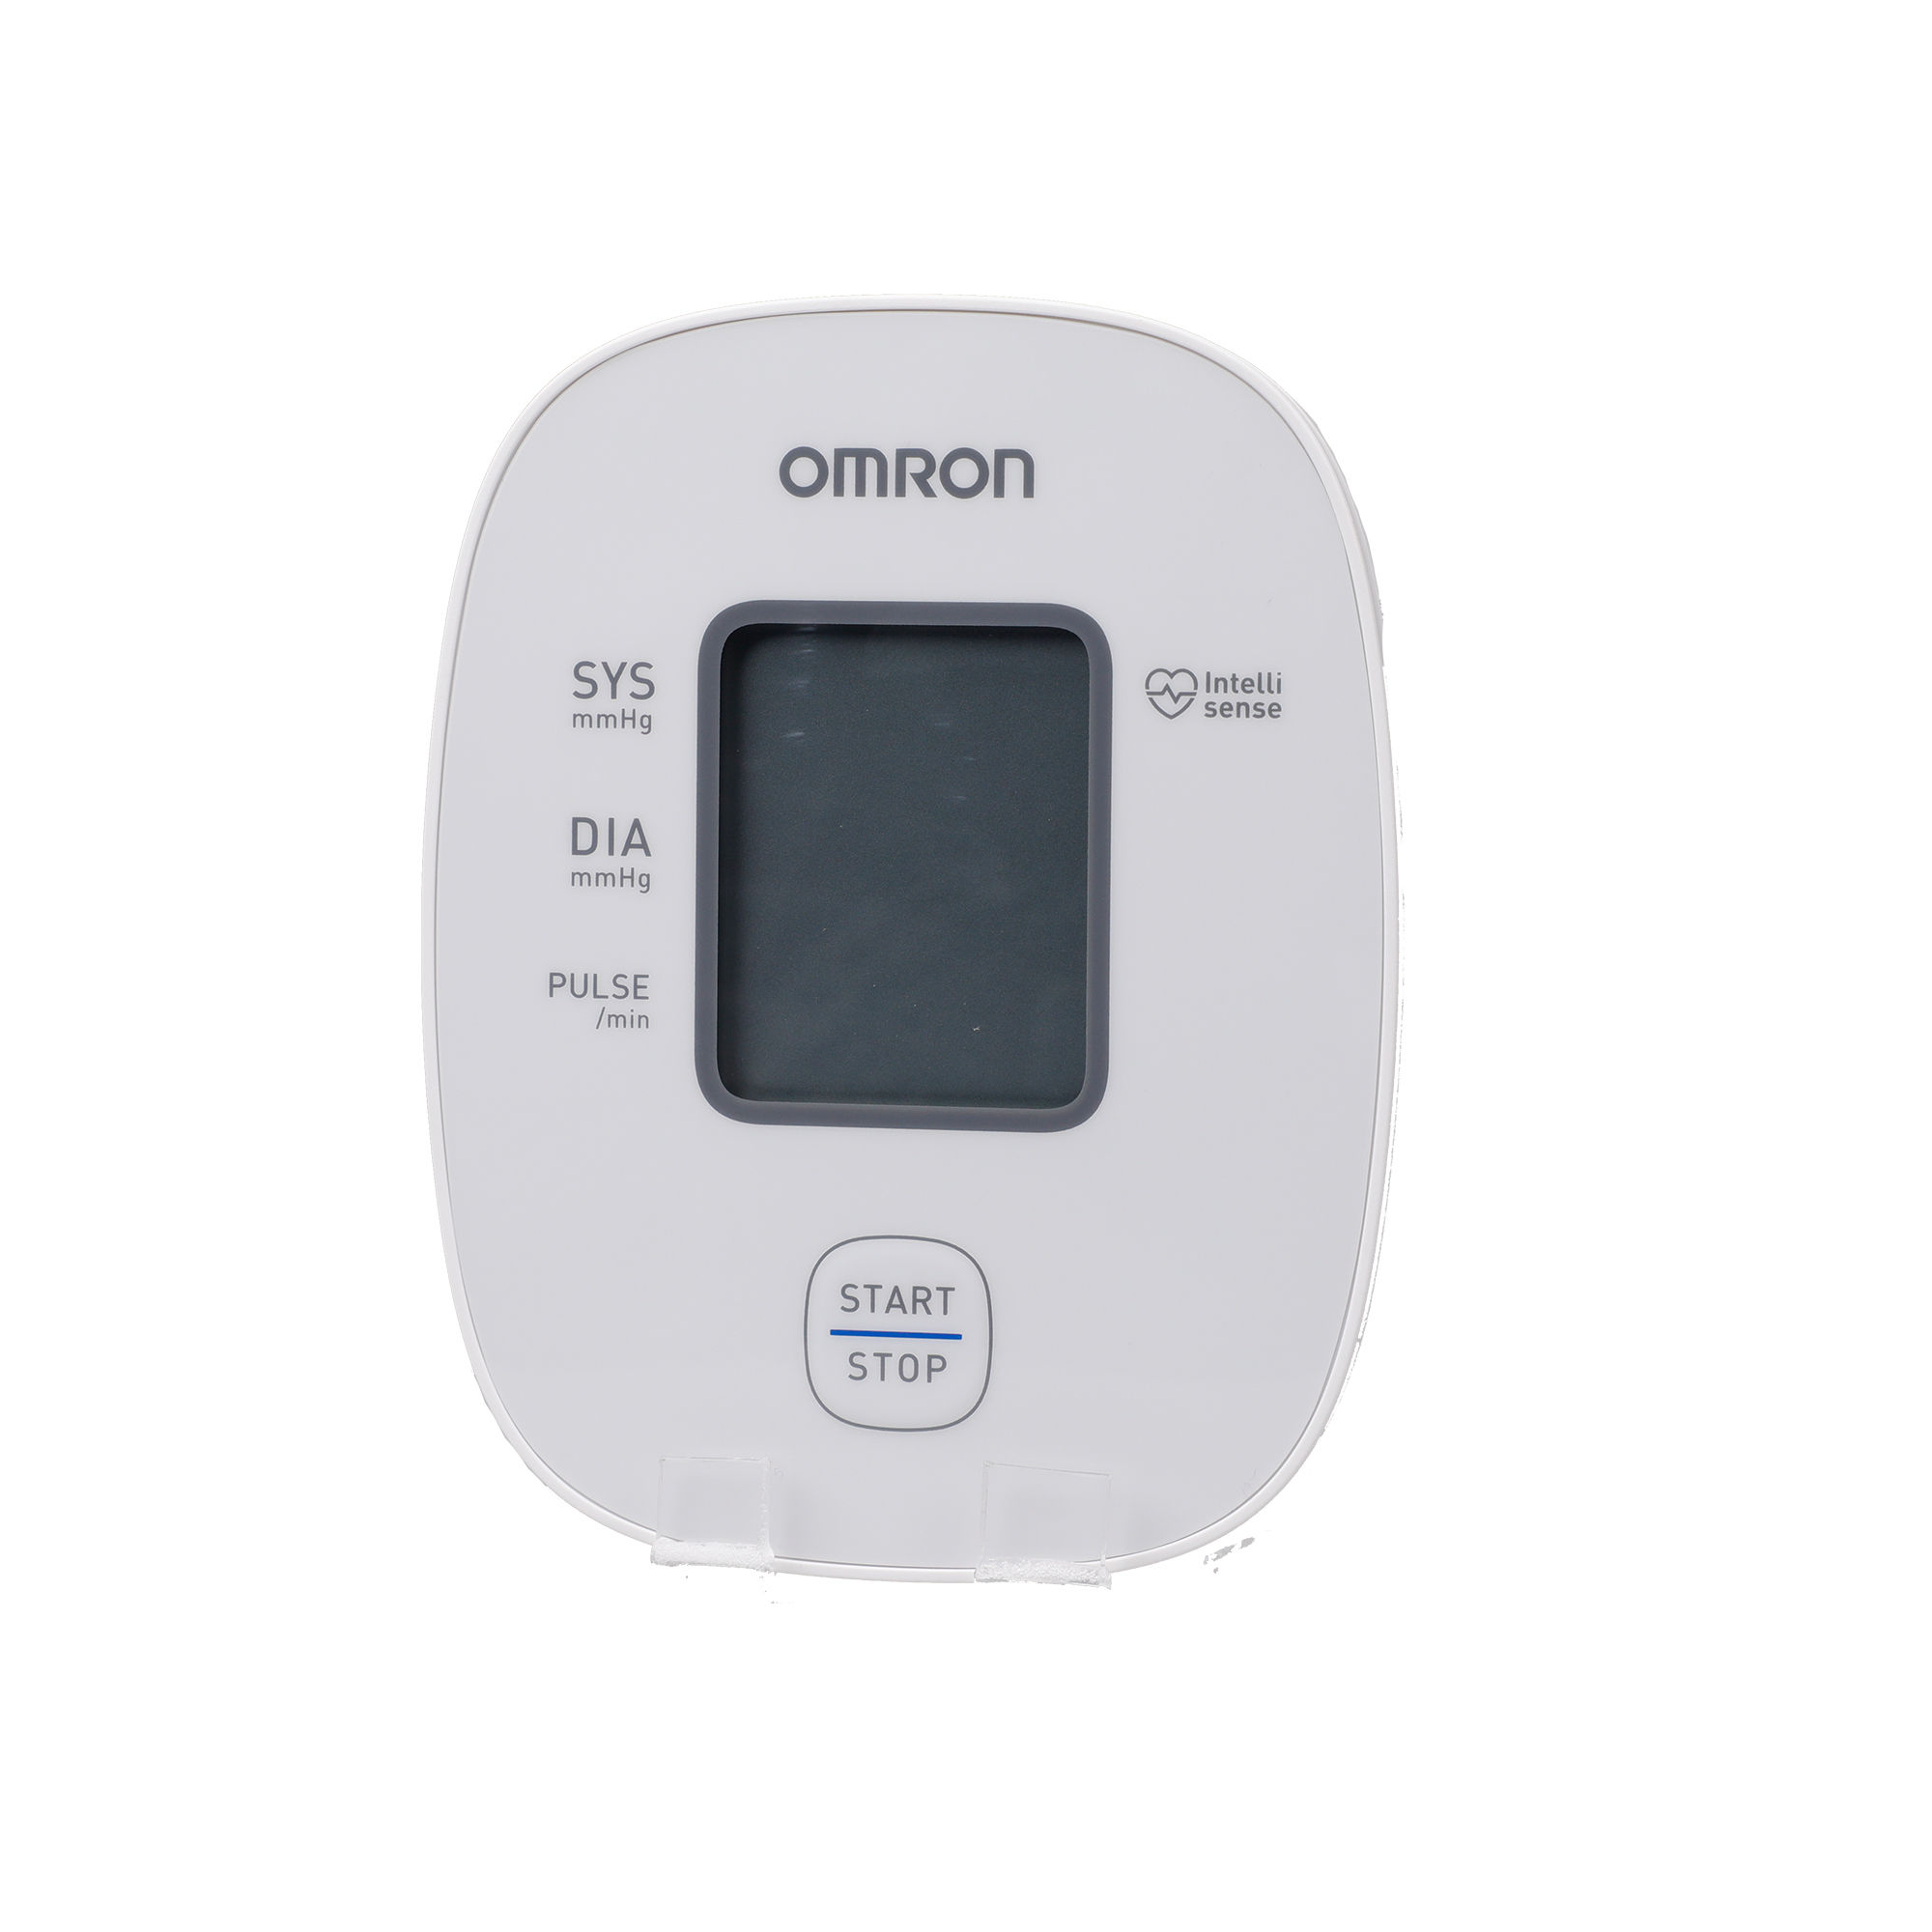 Omron Blood Pressure Monitor HEM-7121 J, 1 Count, Pack of 1 